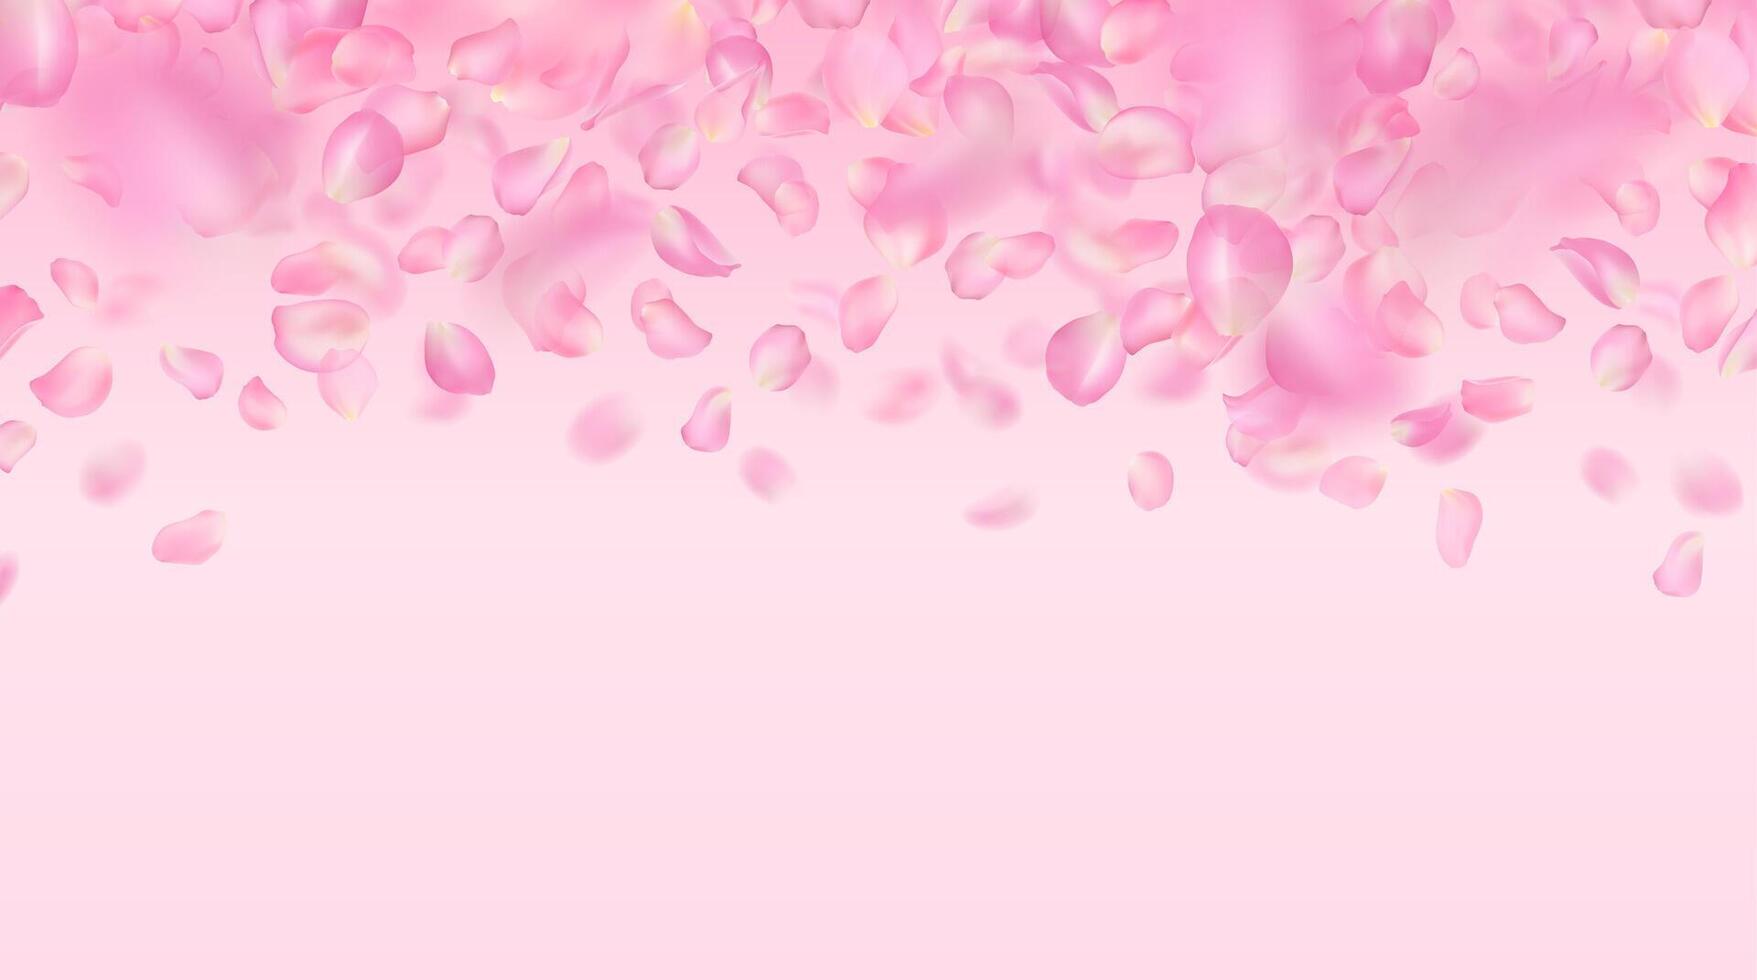 vector antecedentes de realista que cae rosado Rosa pétalos modelo de volador voluminoso borroso sakura pétalos con difuminar efecto. primavera floral ilustración para fondo de pantalla, bandera, romántico saludo tarjeta.